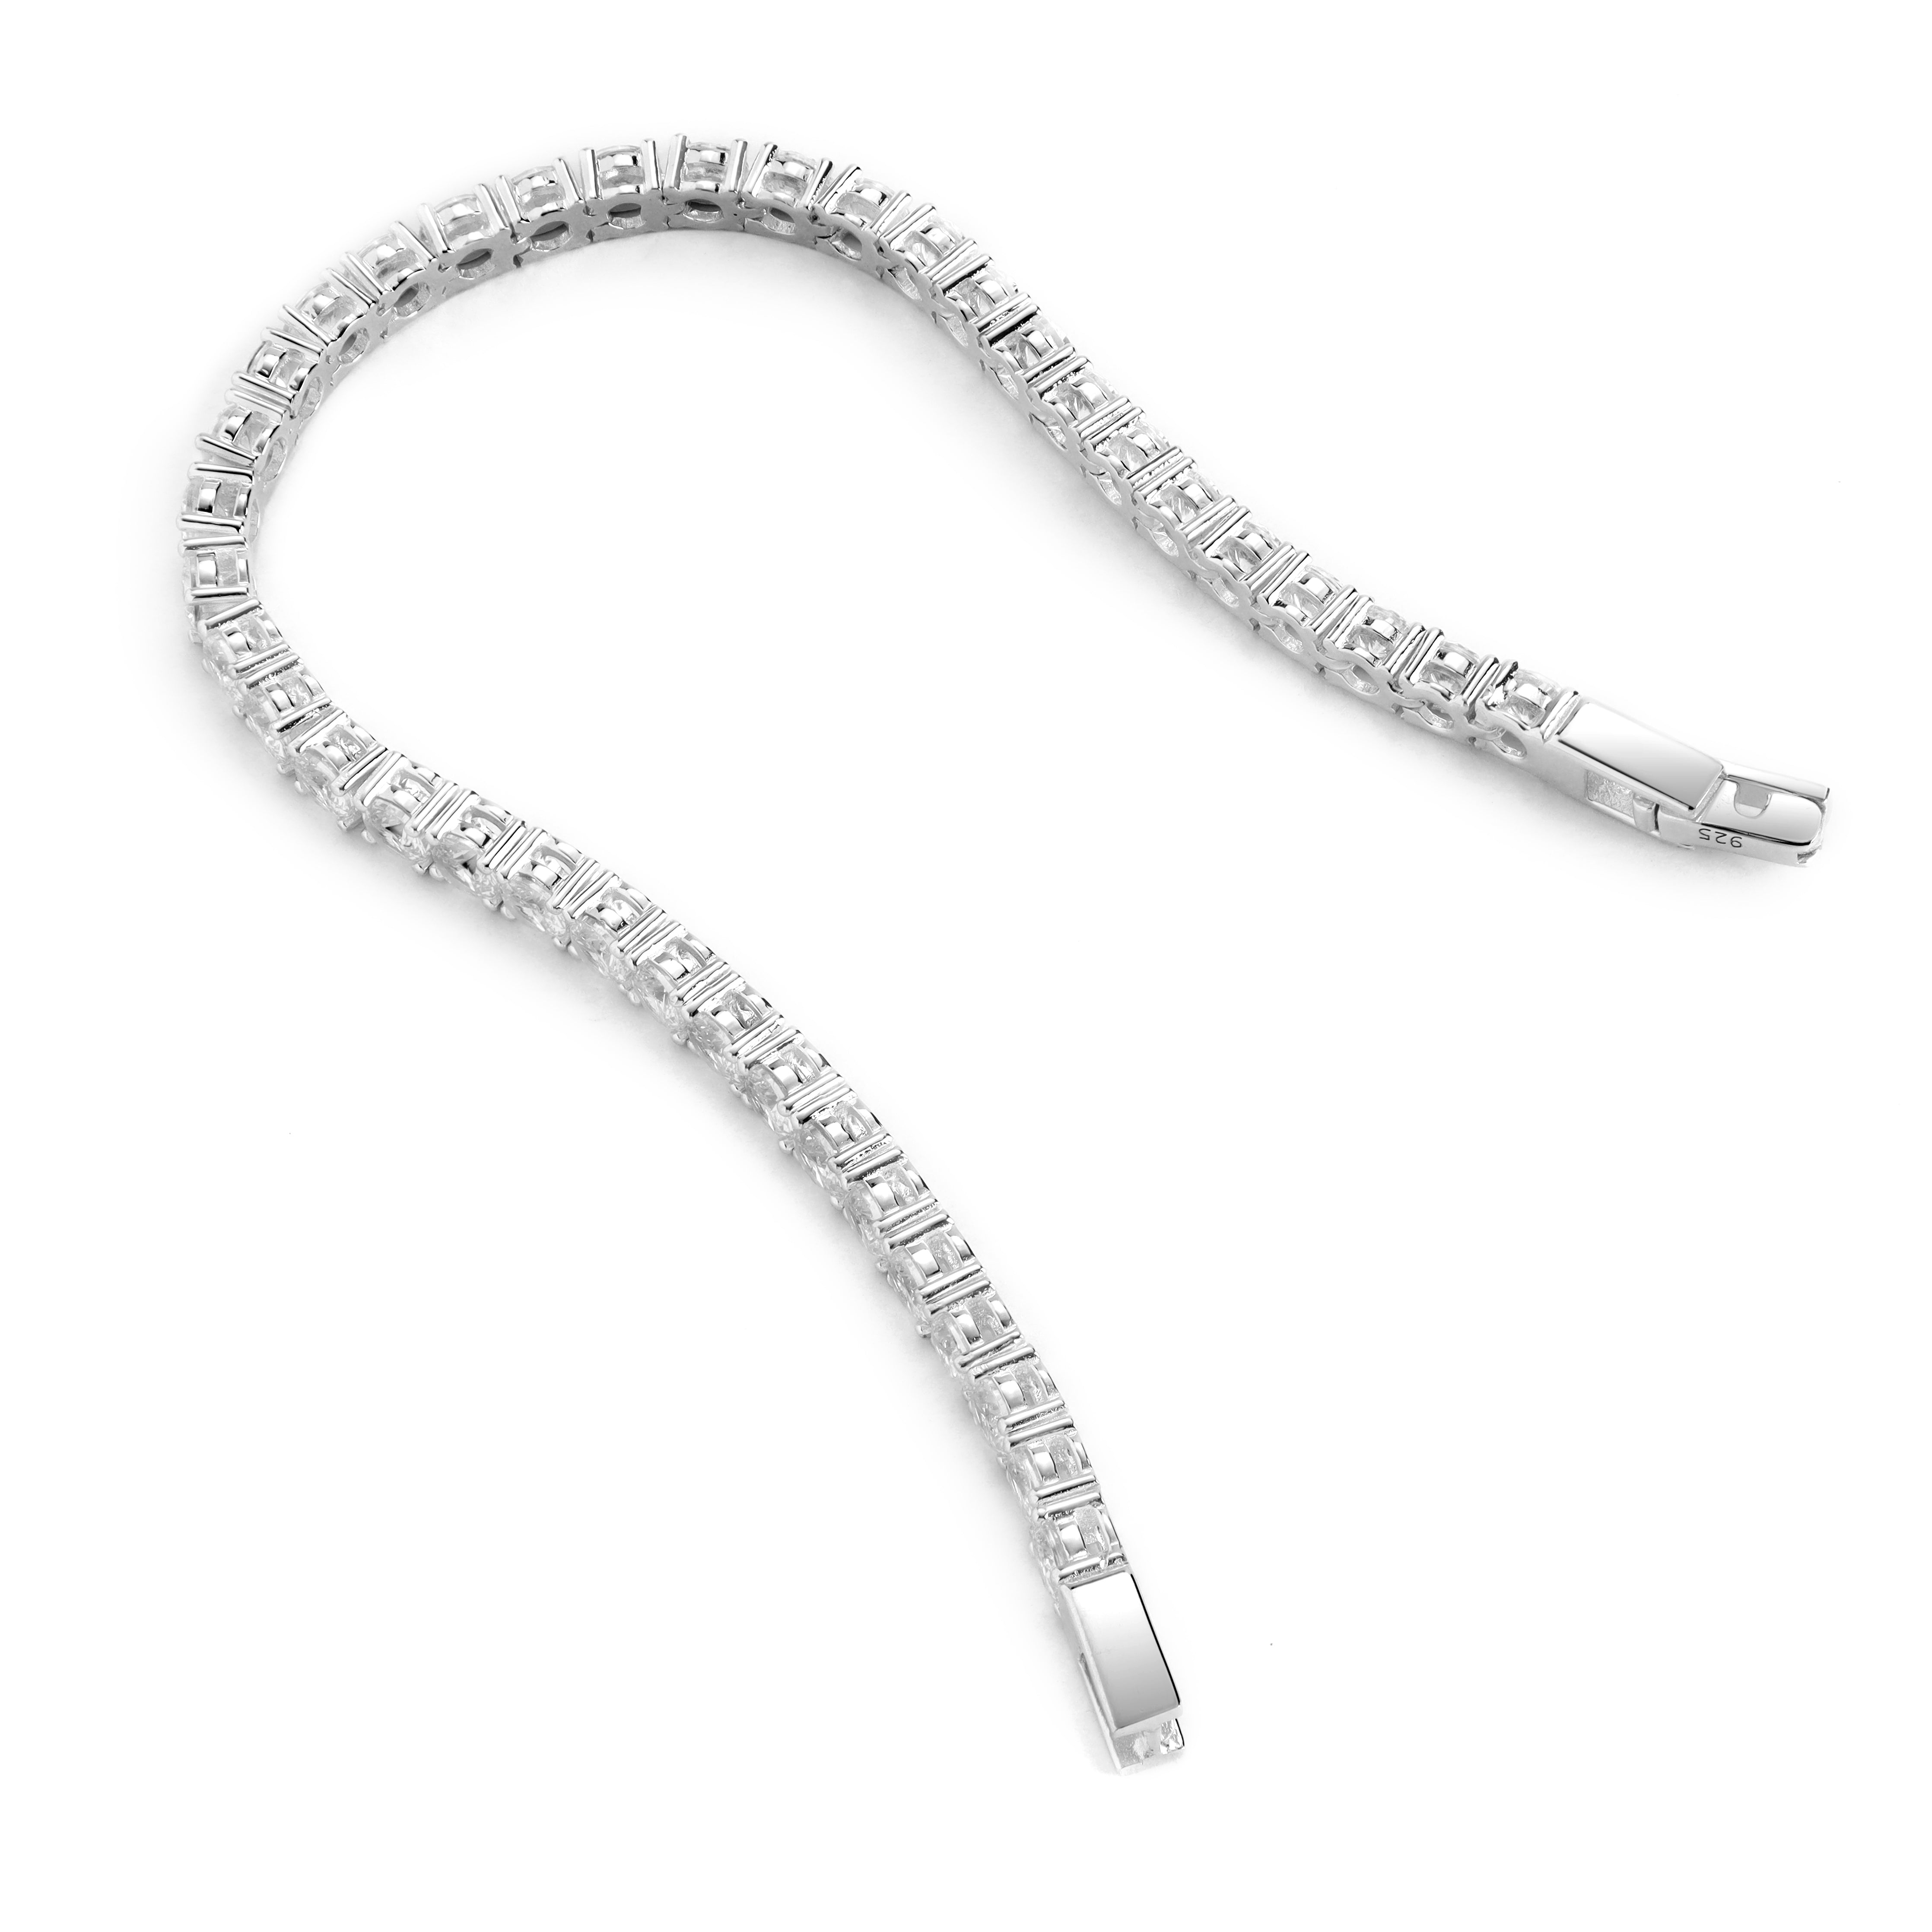 4mm tennis chain bracelet bracelet - made of 925 sterling silver